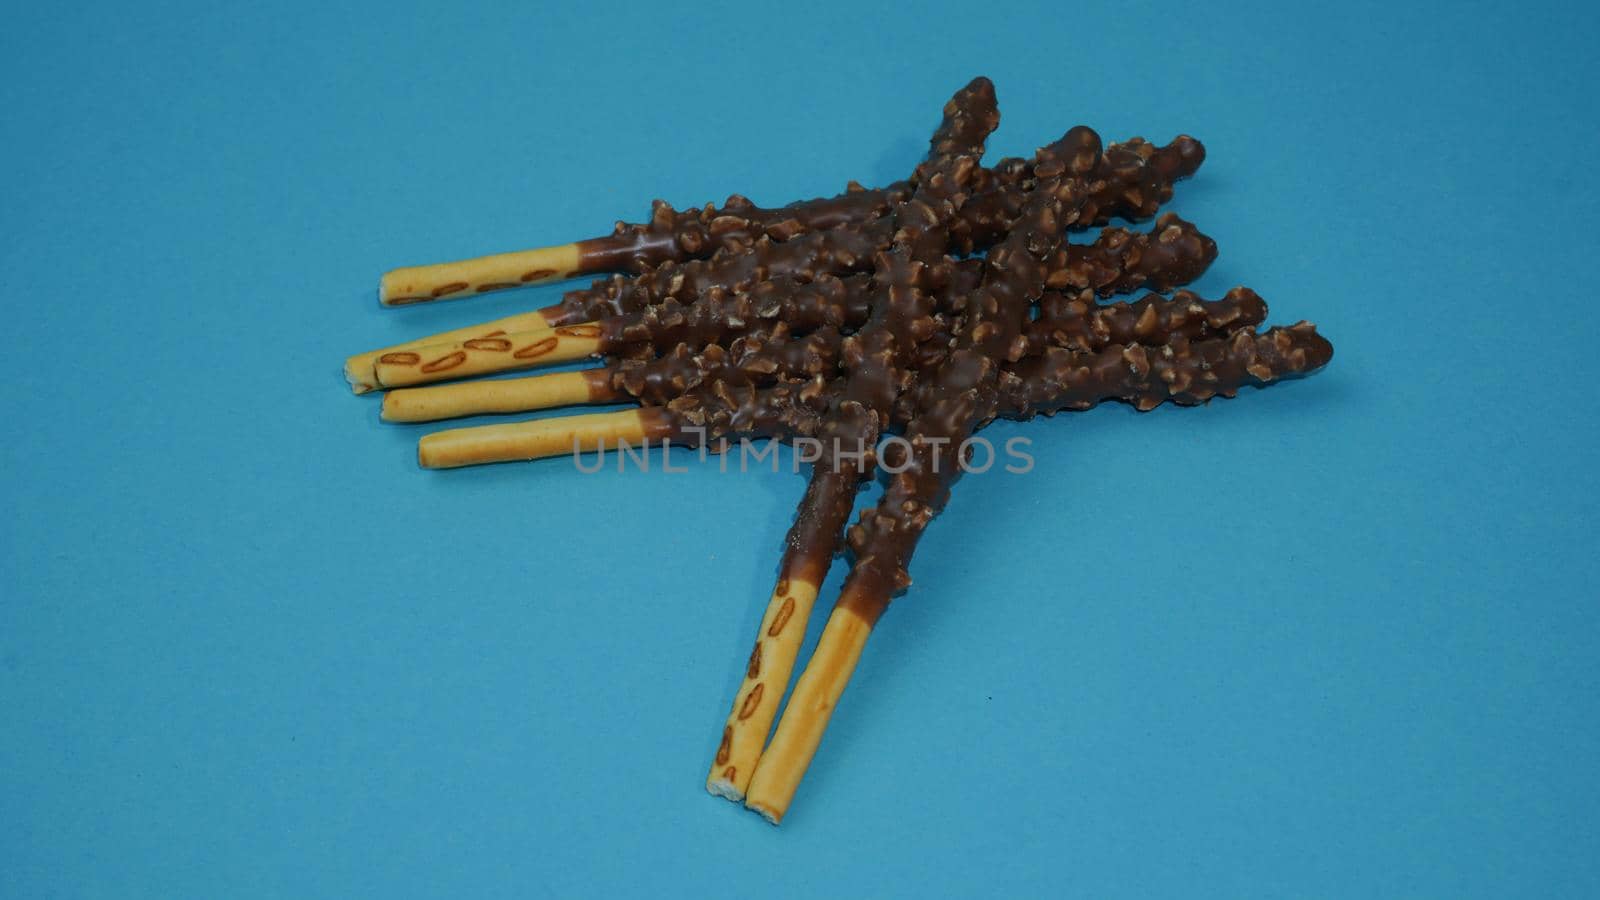 Chocolate crispy sticks with hazelnut sprinkles on a blue background.